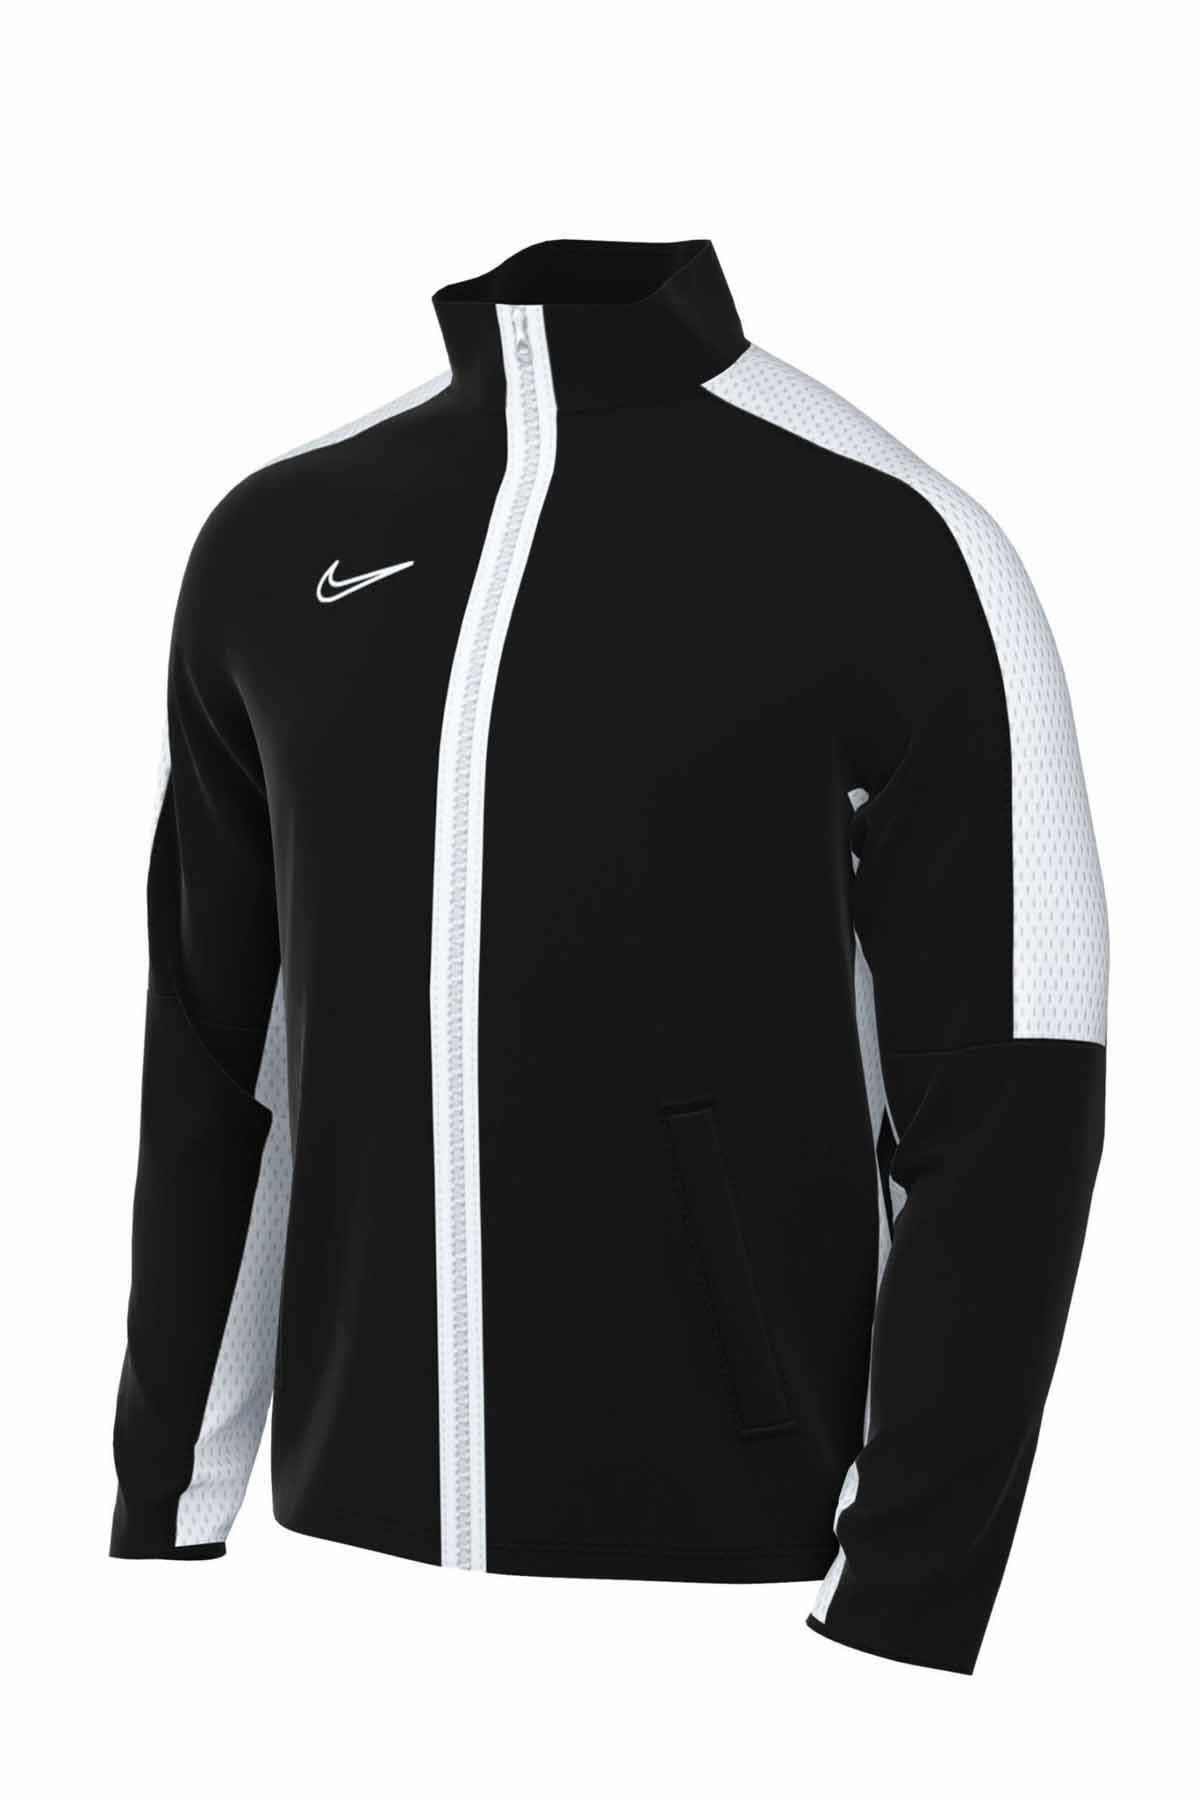 Nike Mikro Kumaş Dri-fit Academy Erkek Eşofman Üst Dr1710-010-sıyah